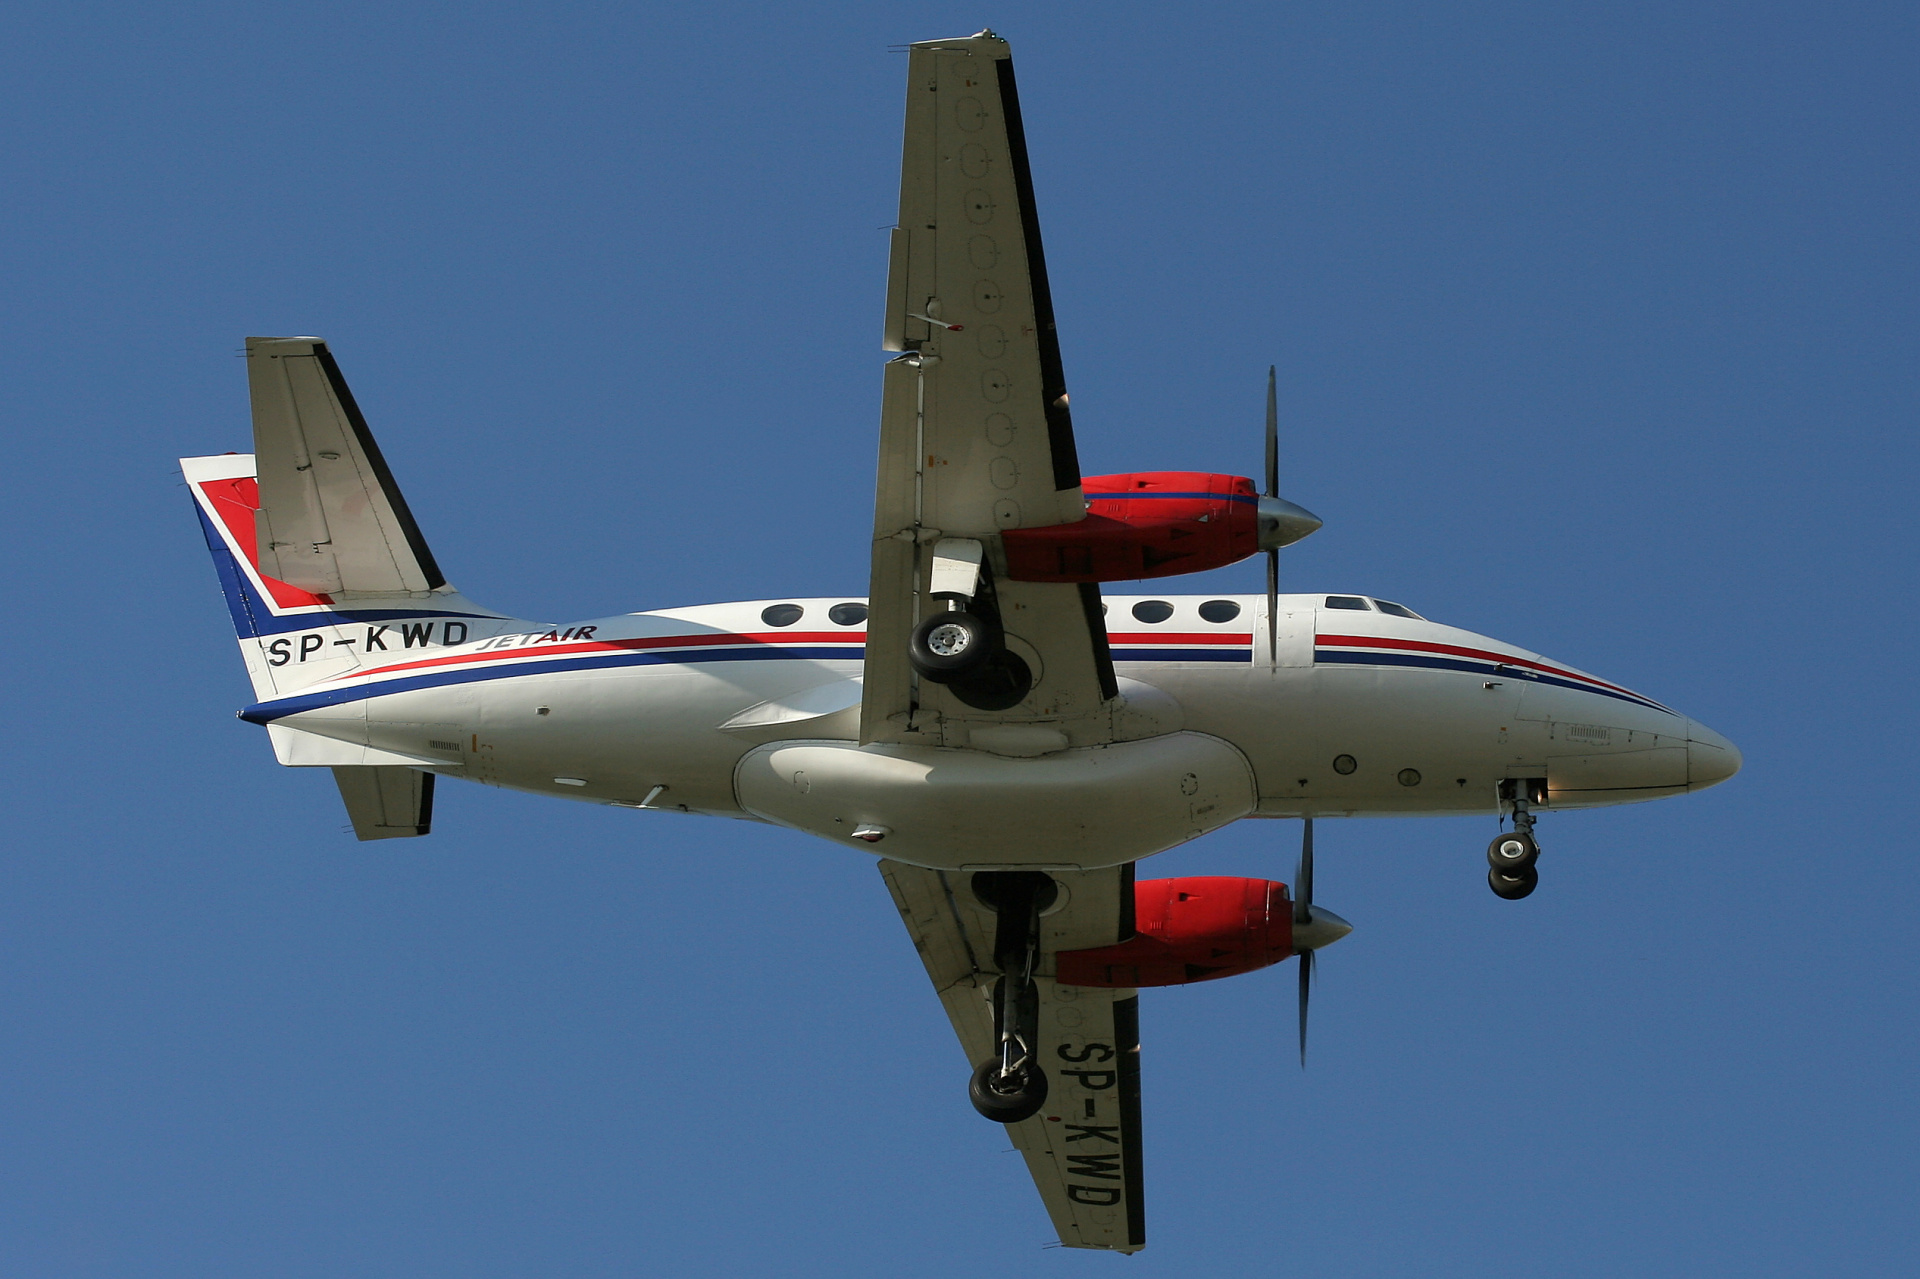 SP-KWD, Jet Air (Aircraft » EPWA Spotting » BAe Jetstream 32)